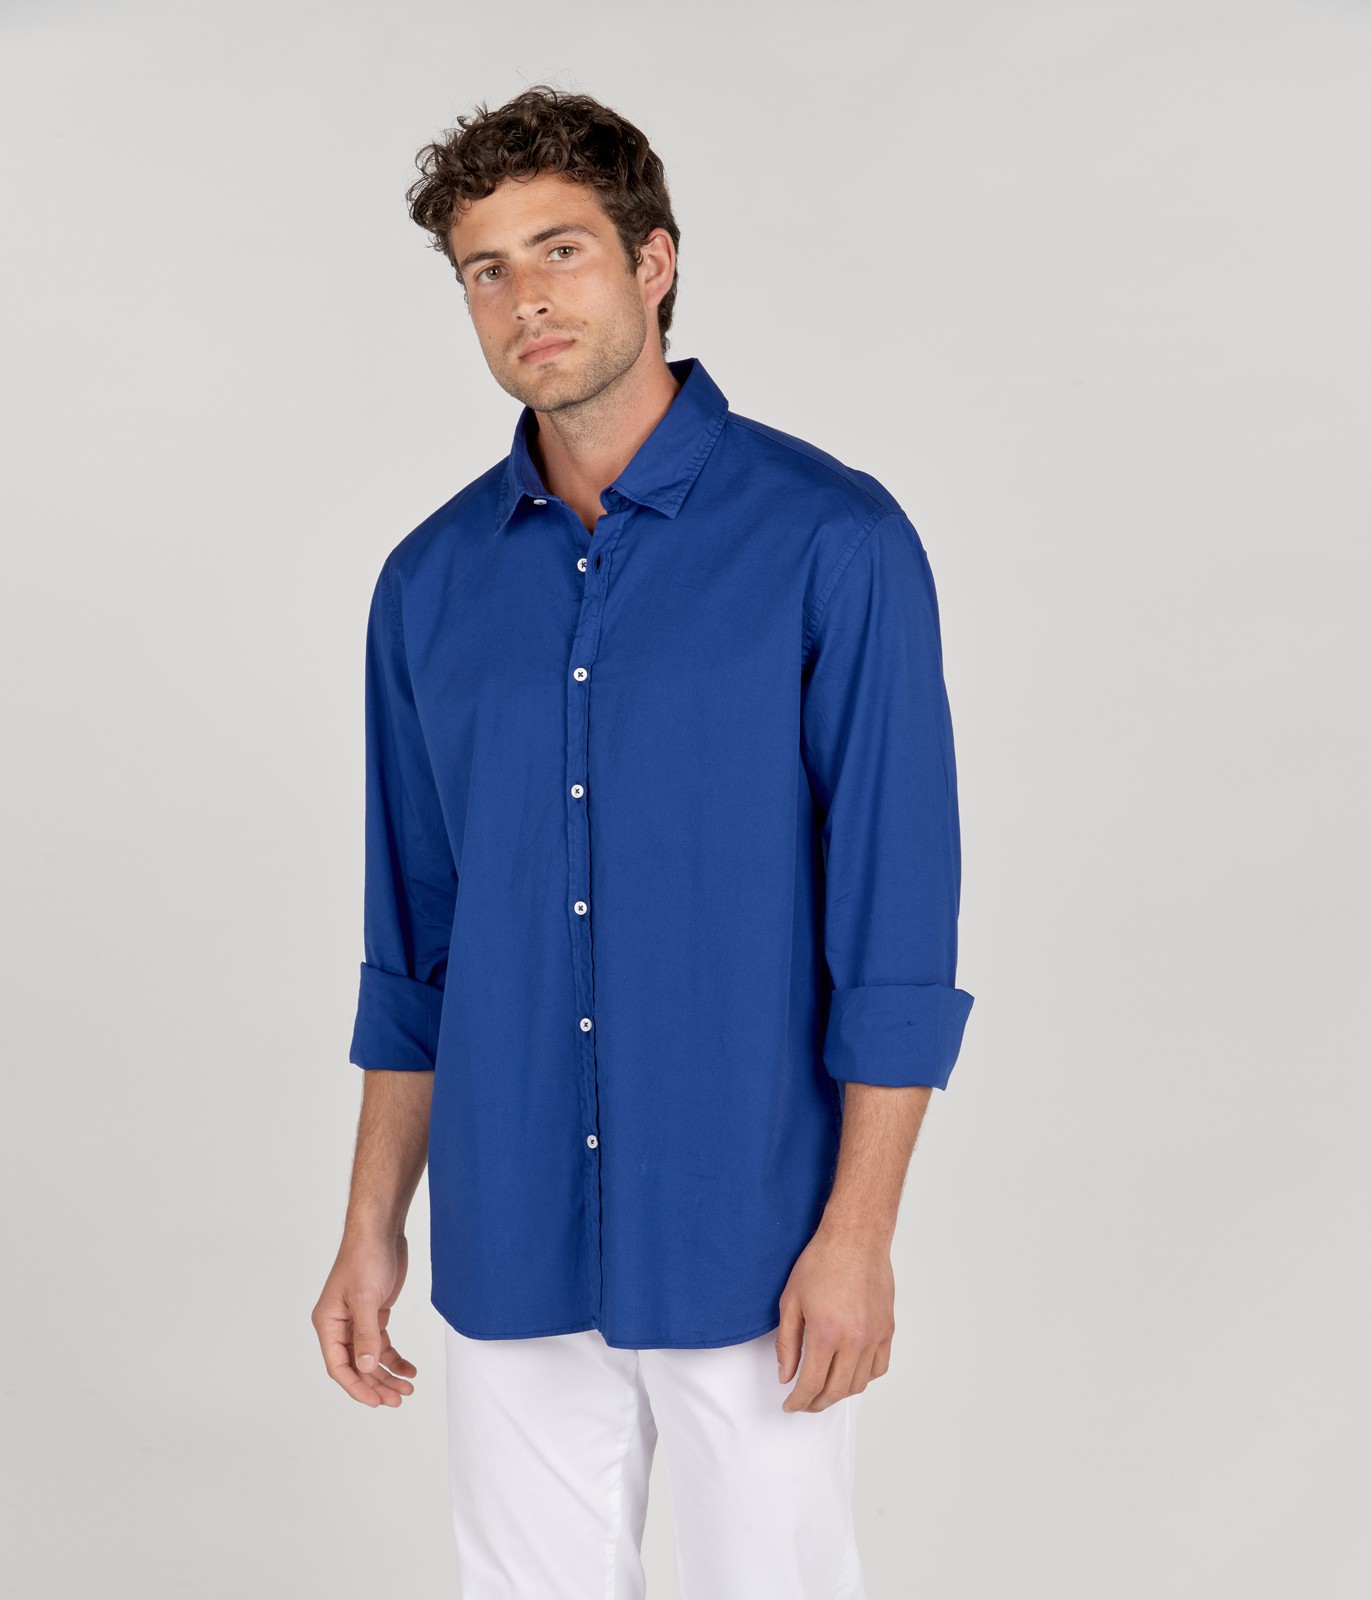 sleeves for men brand Quality color indigo shirt Plain long Europann